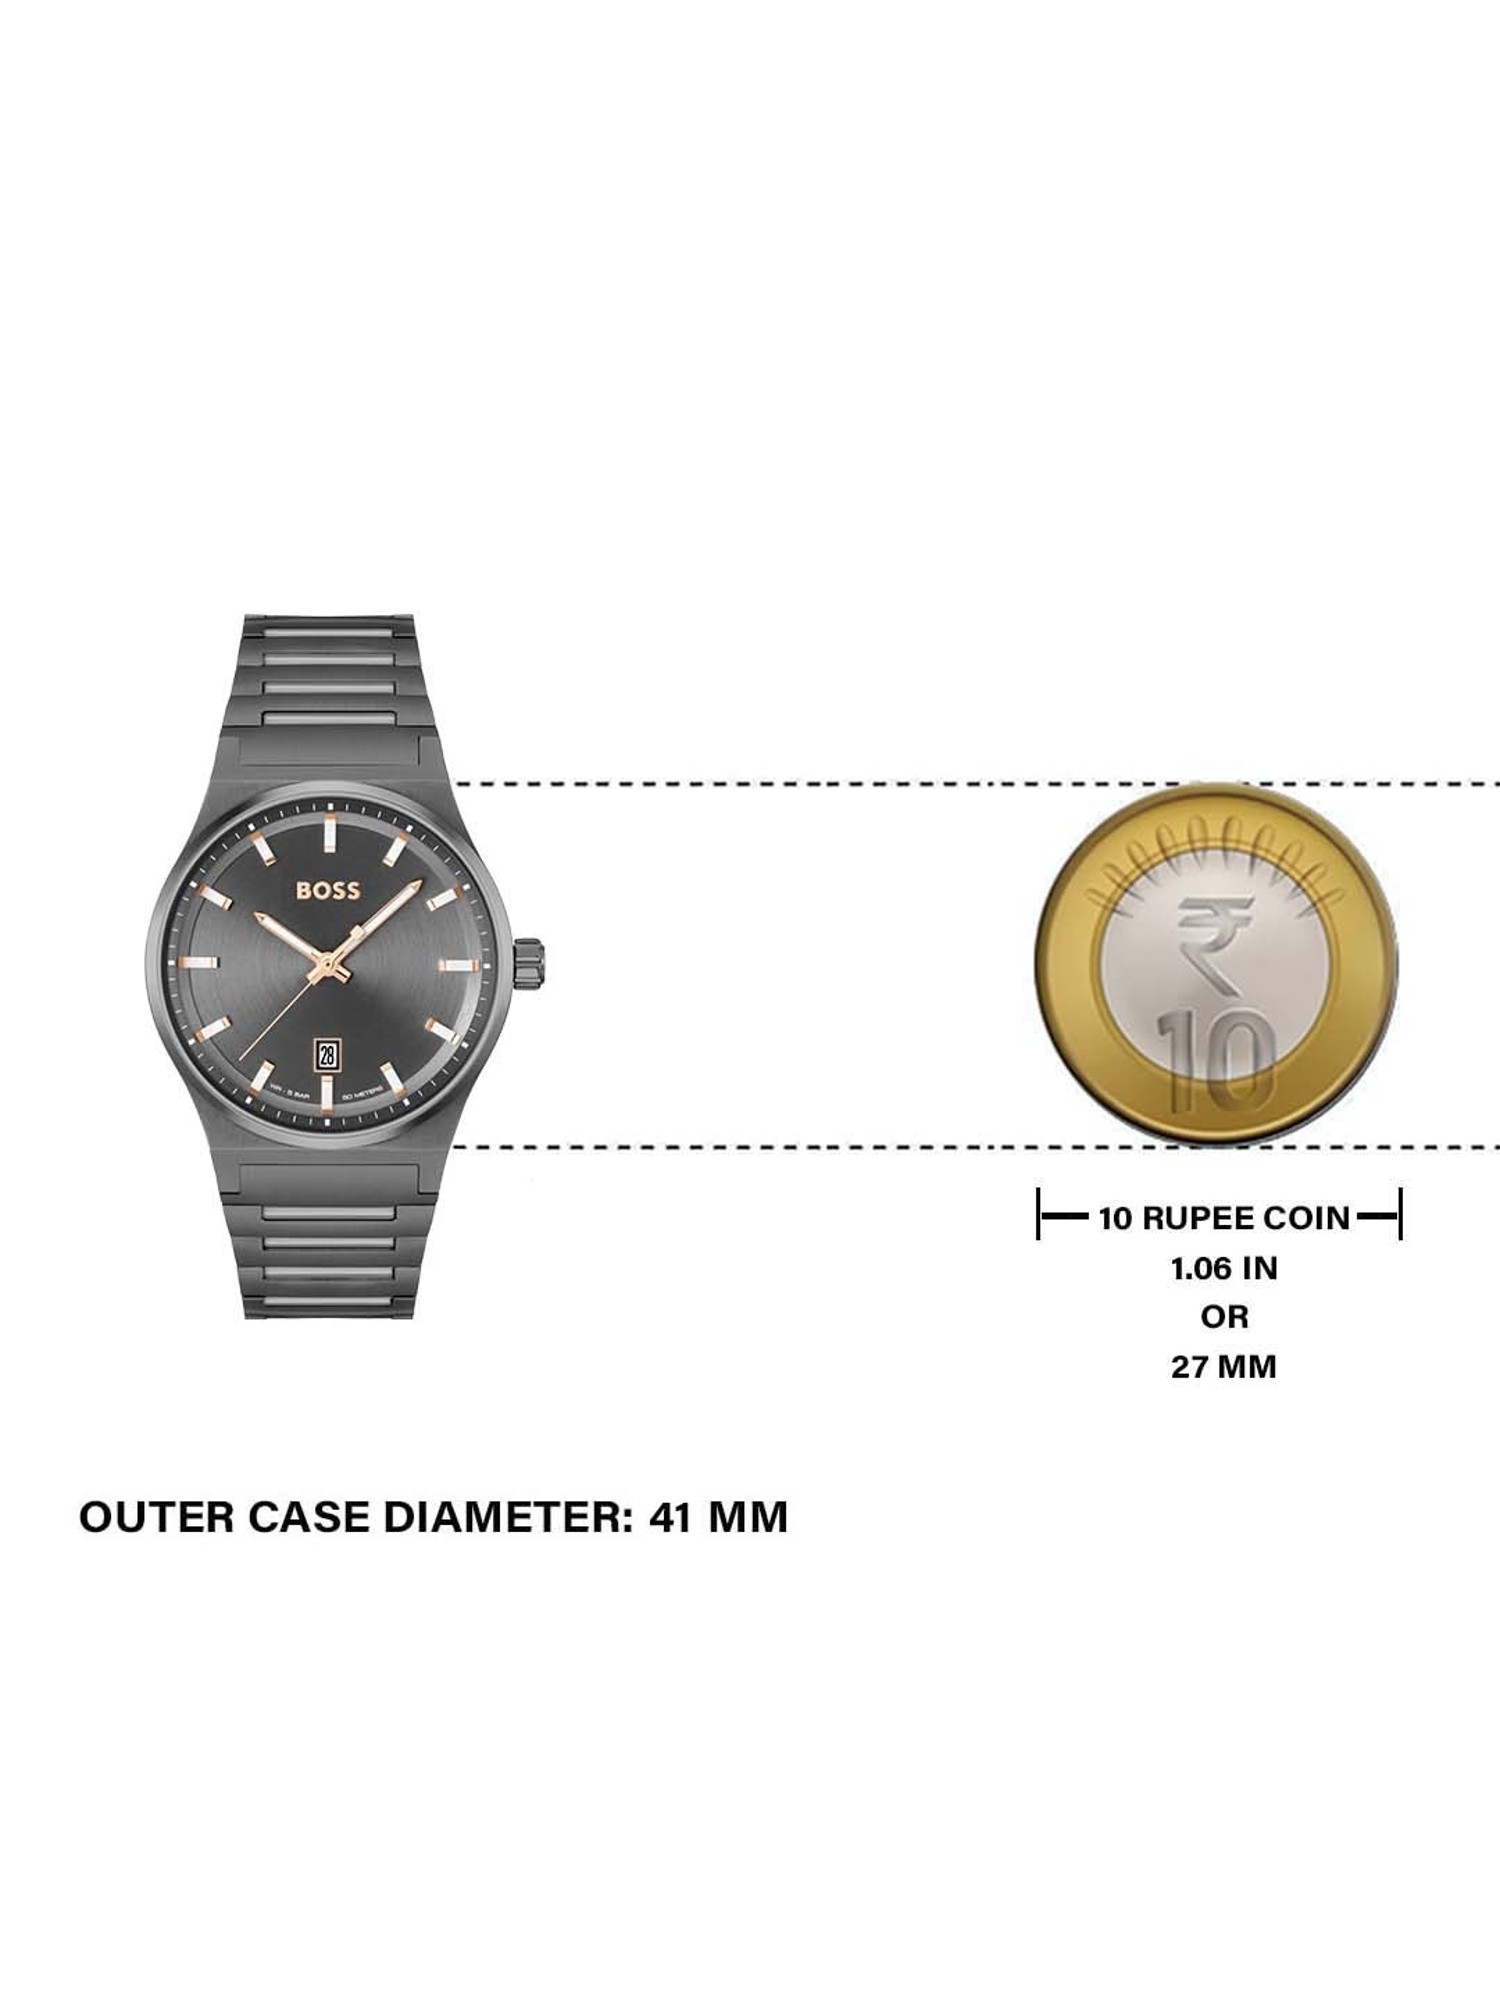 Best for CLiQ Candor at Buy Watch @ Men Tata Boss Price MGI-1514078 Analog